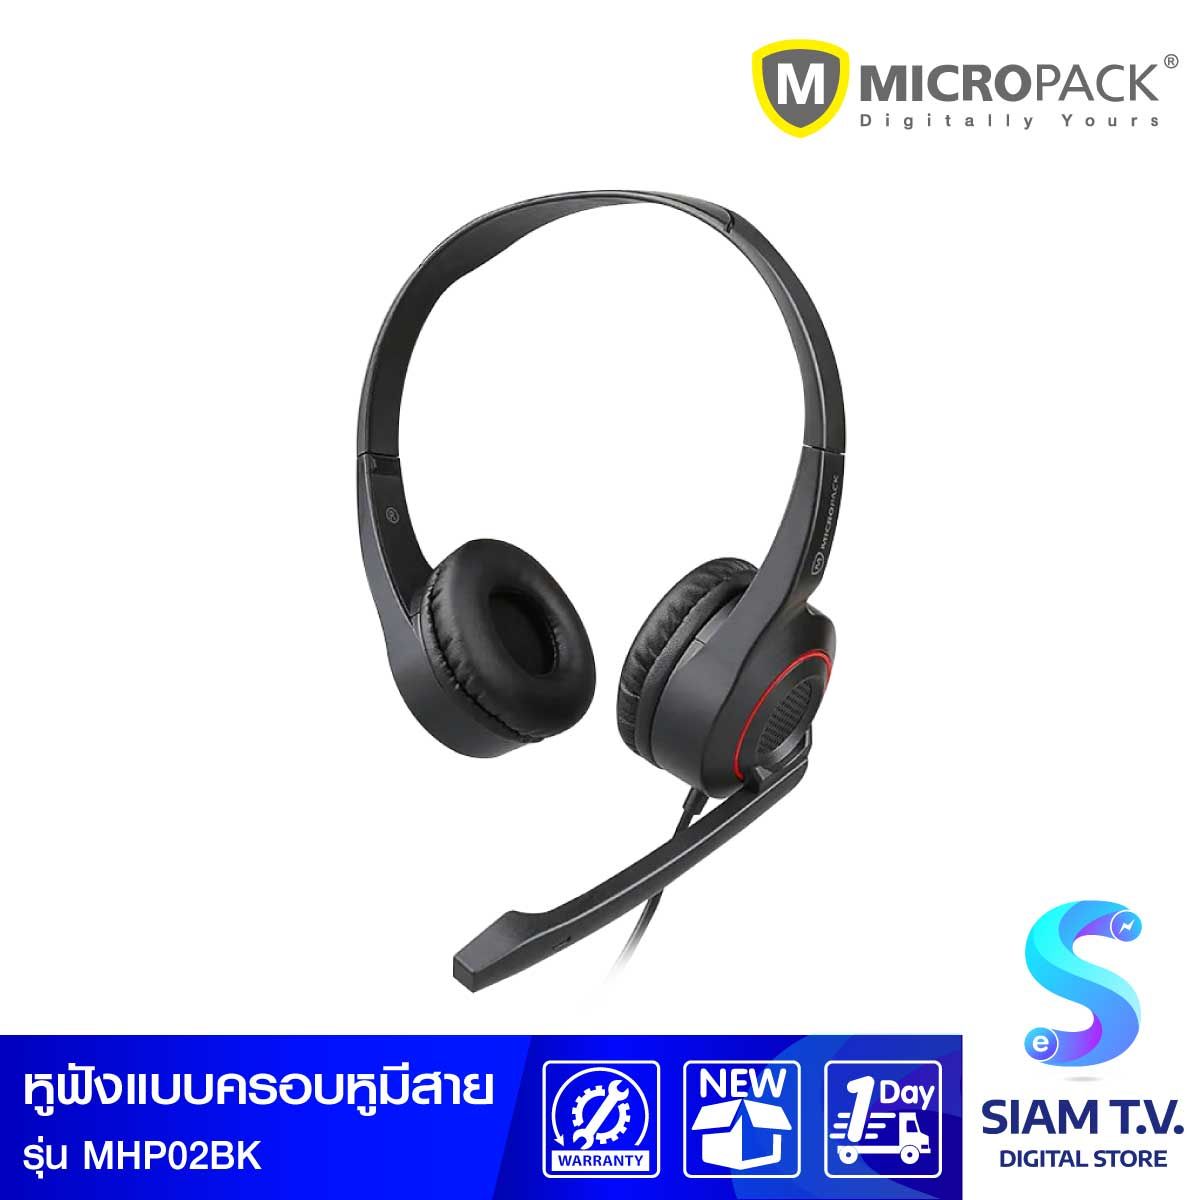 HEADSET (หูฟัง) MICROPACK MHP-02 (BLACK)